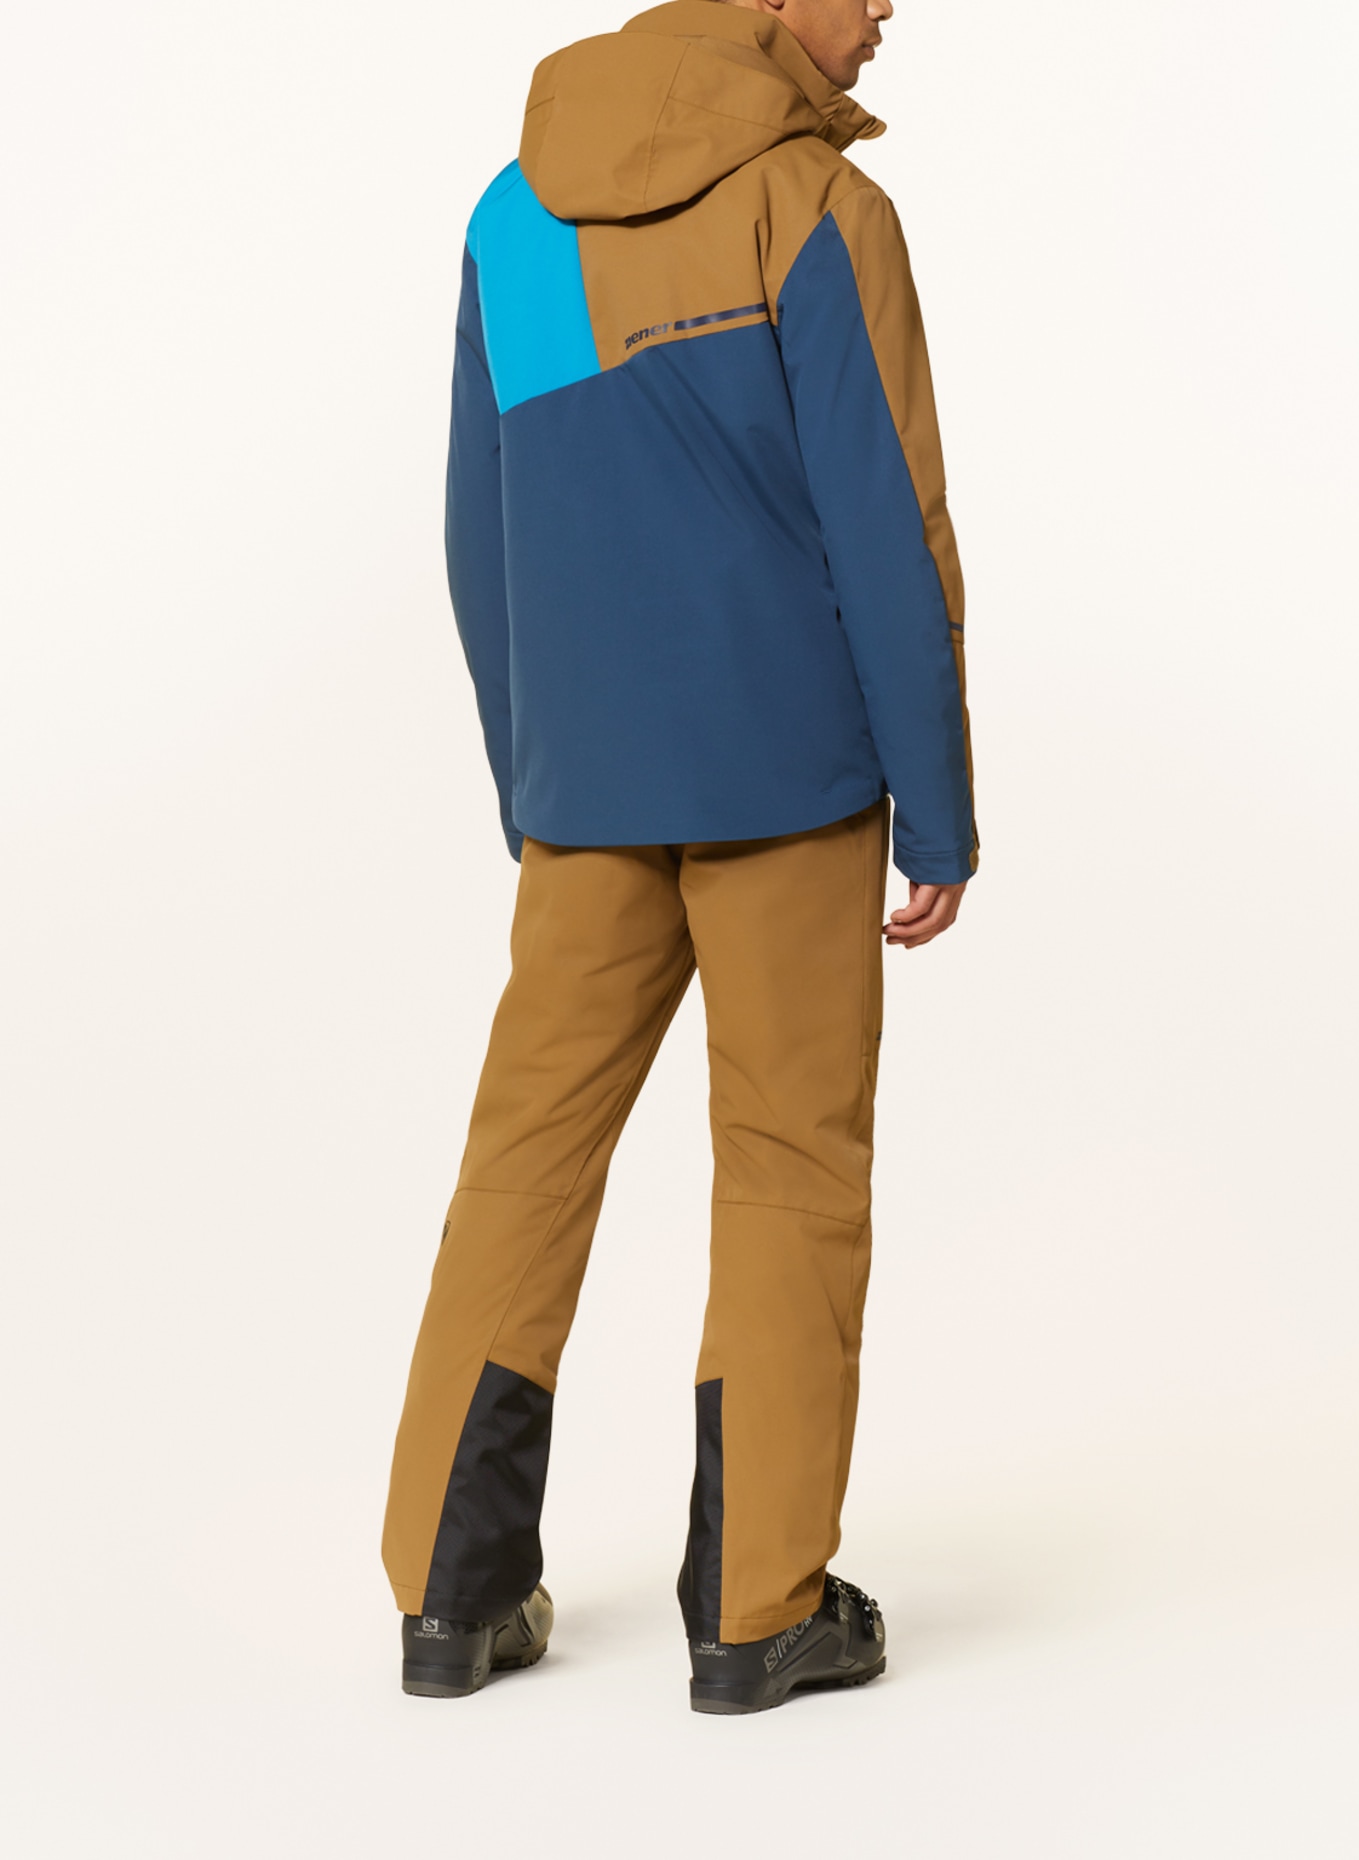 olive/ Ski jacket dark in TIMPA blue turquoise/ ziener